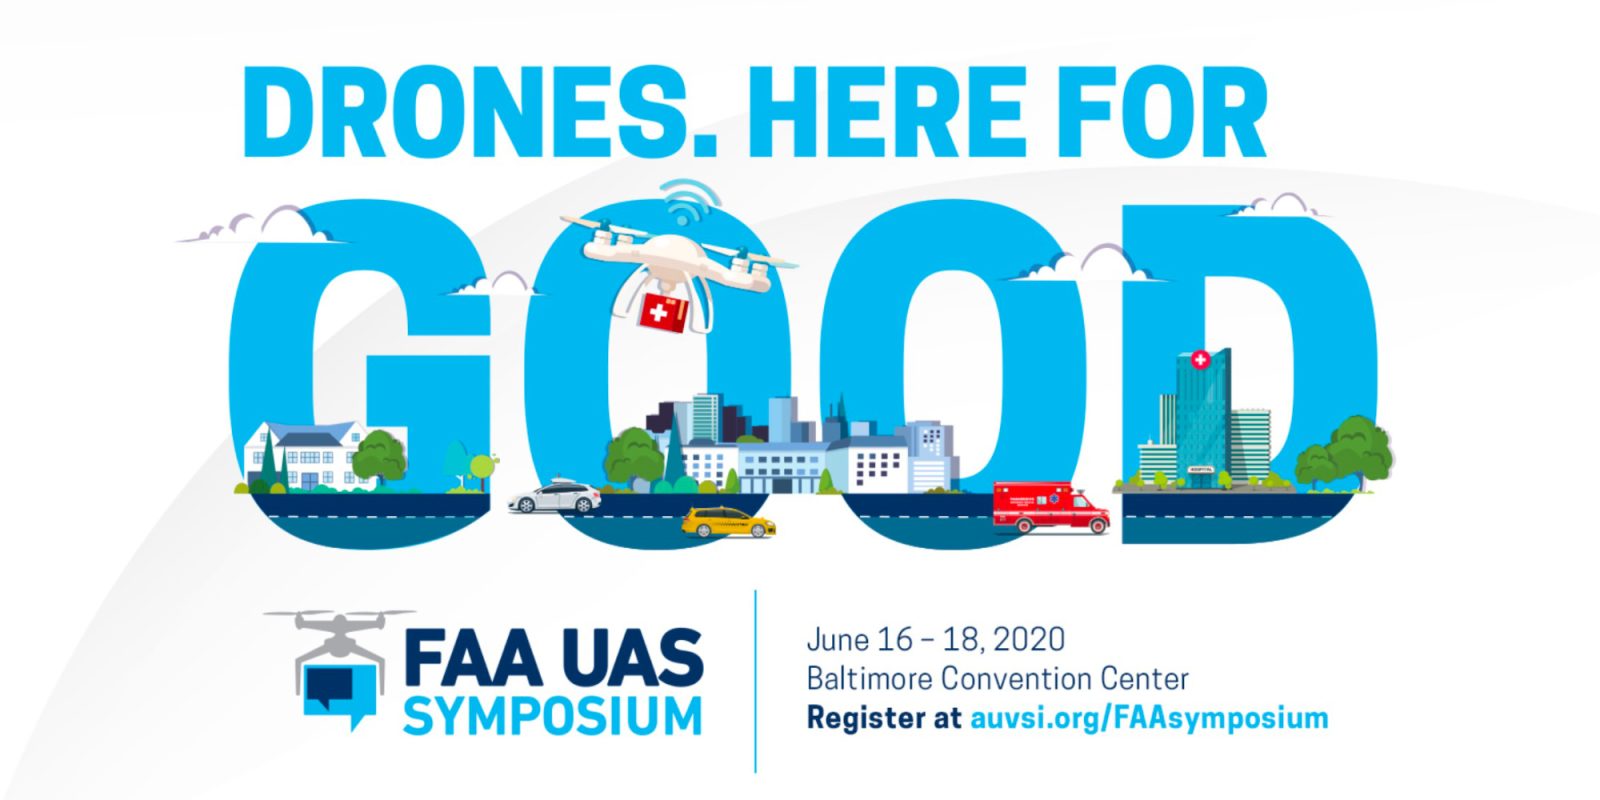 FAA UAS Symposium: Drones. Here for good.